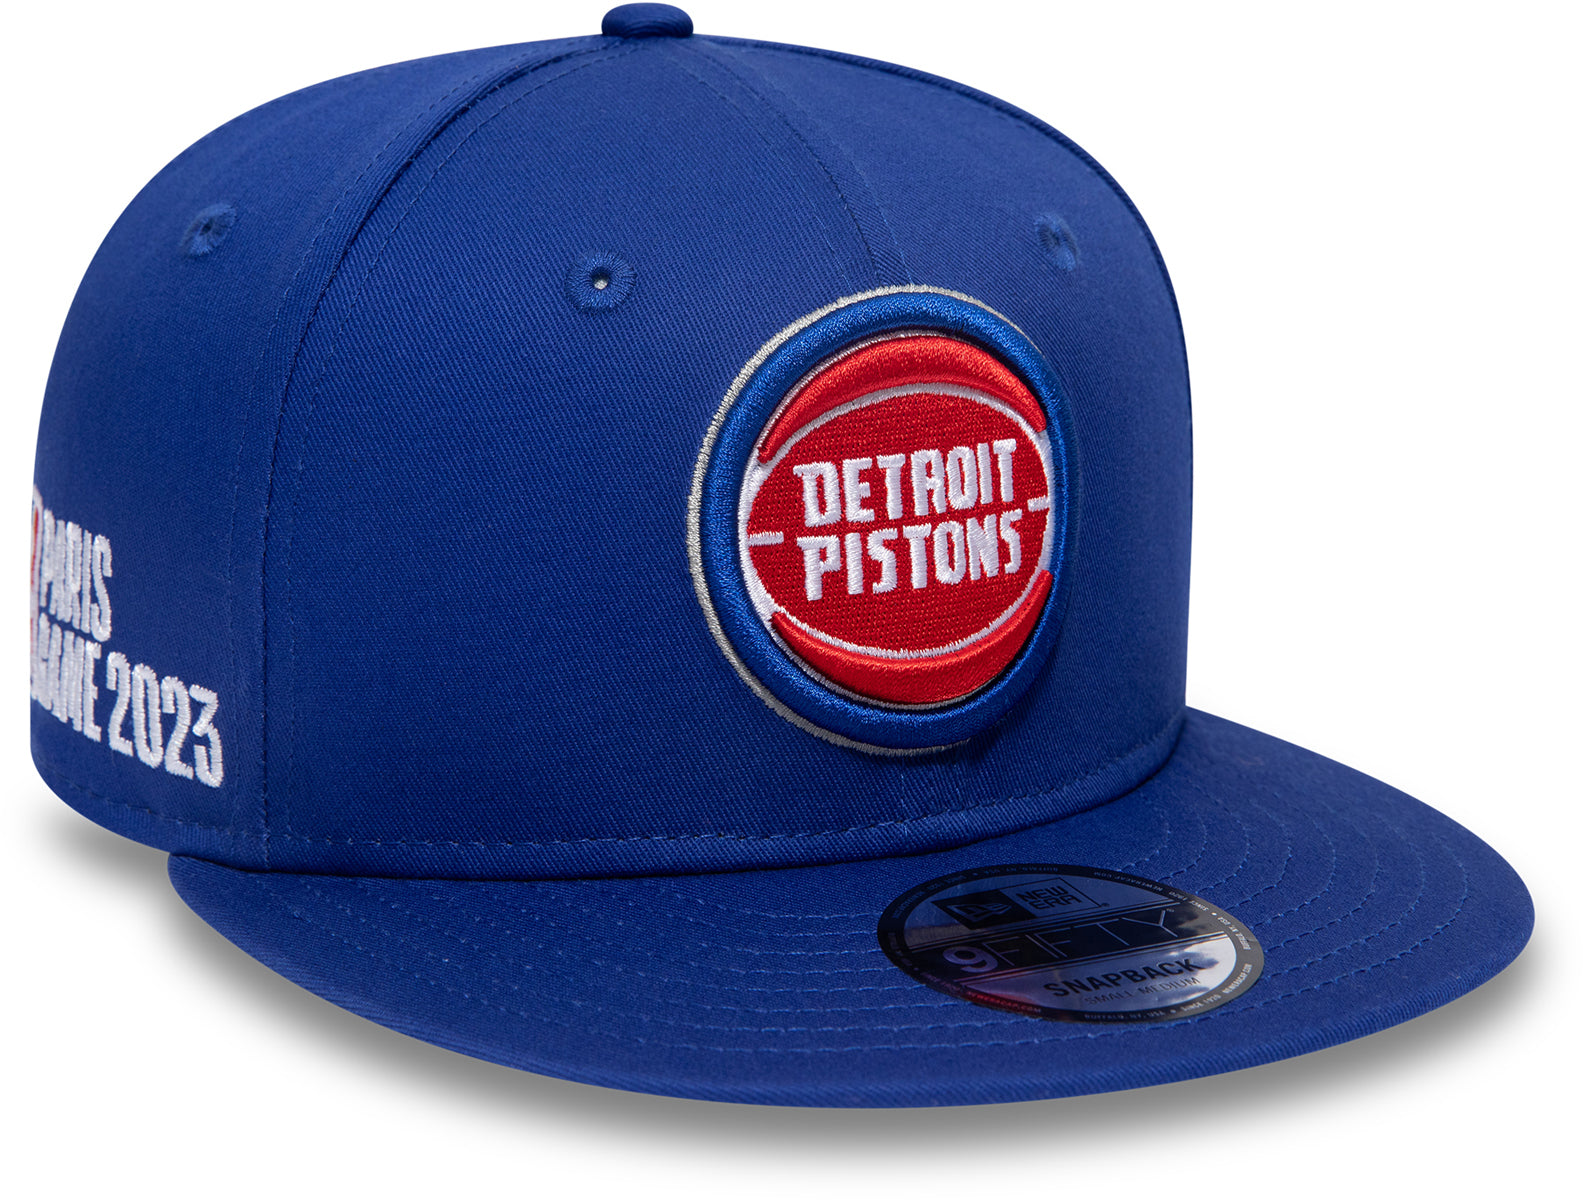 Detroit Pistons Hats, Pistons Caps, Beanie, Snapbacks